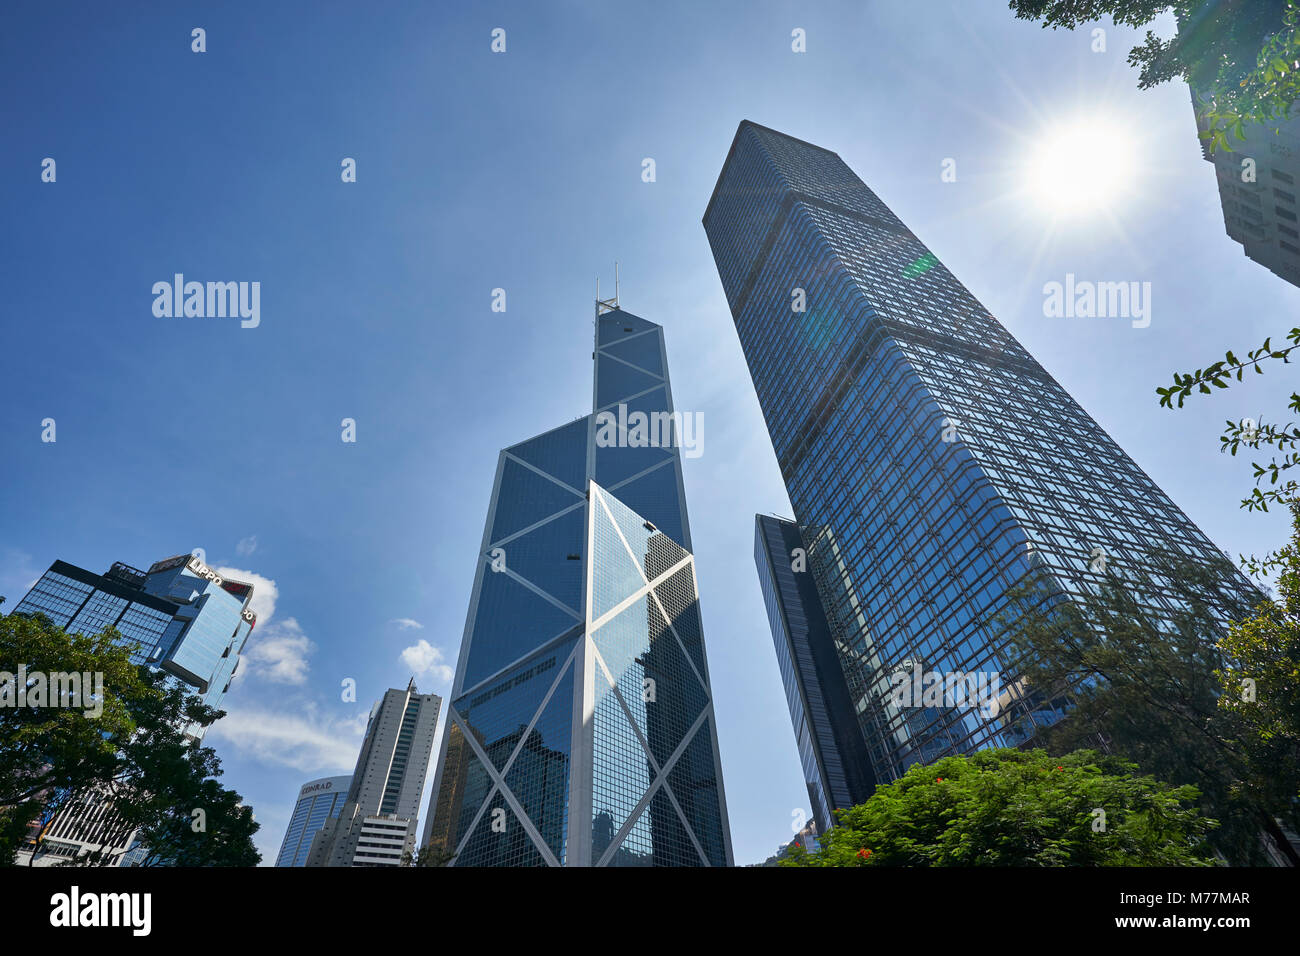 Bank of China Building and Cheung Kong Centre towers in Central, Hong Kong Island's financial district, Hong Kong, China, Asia Stock Photo